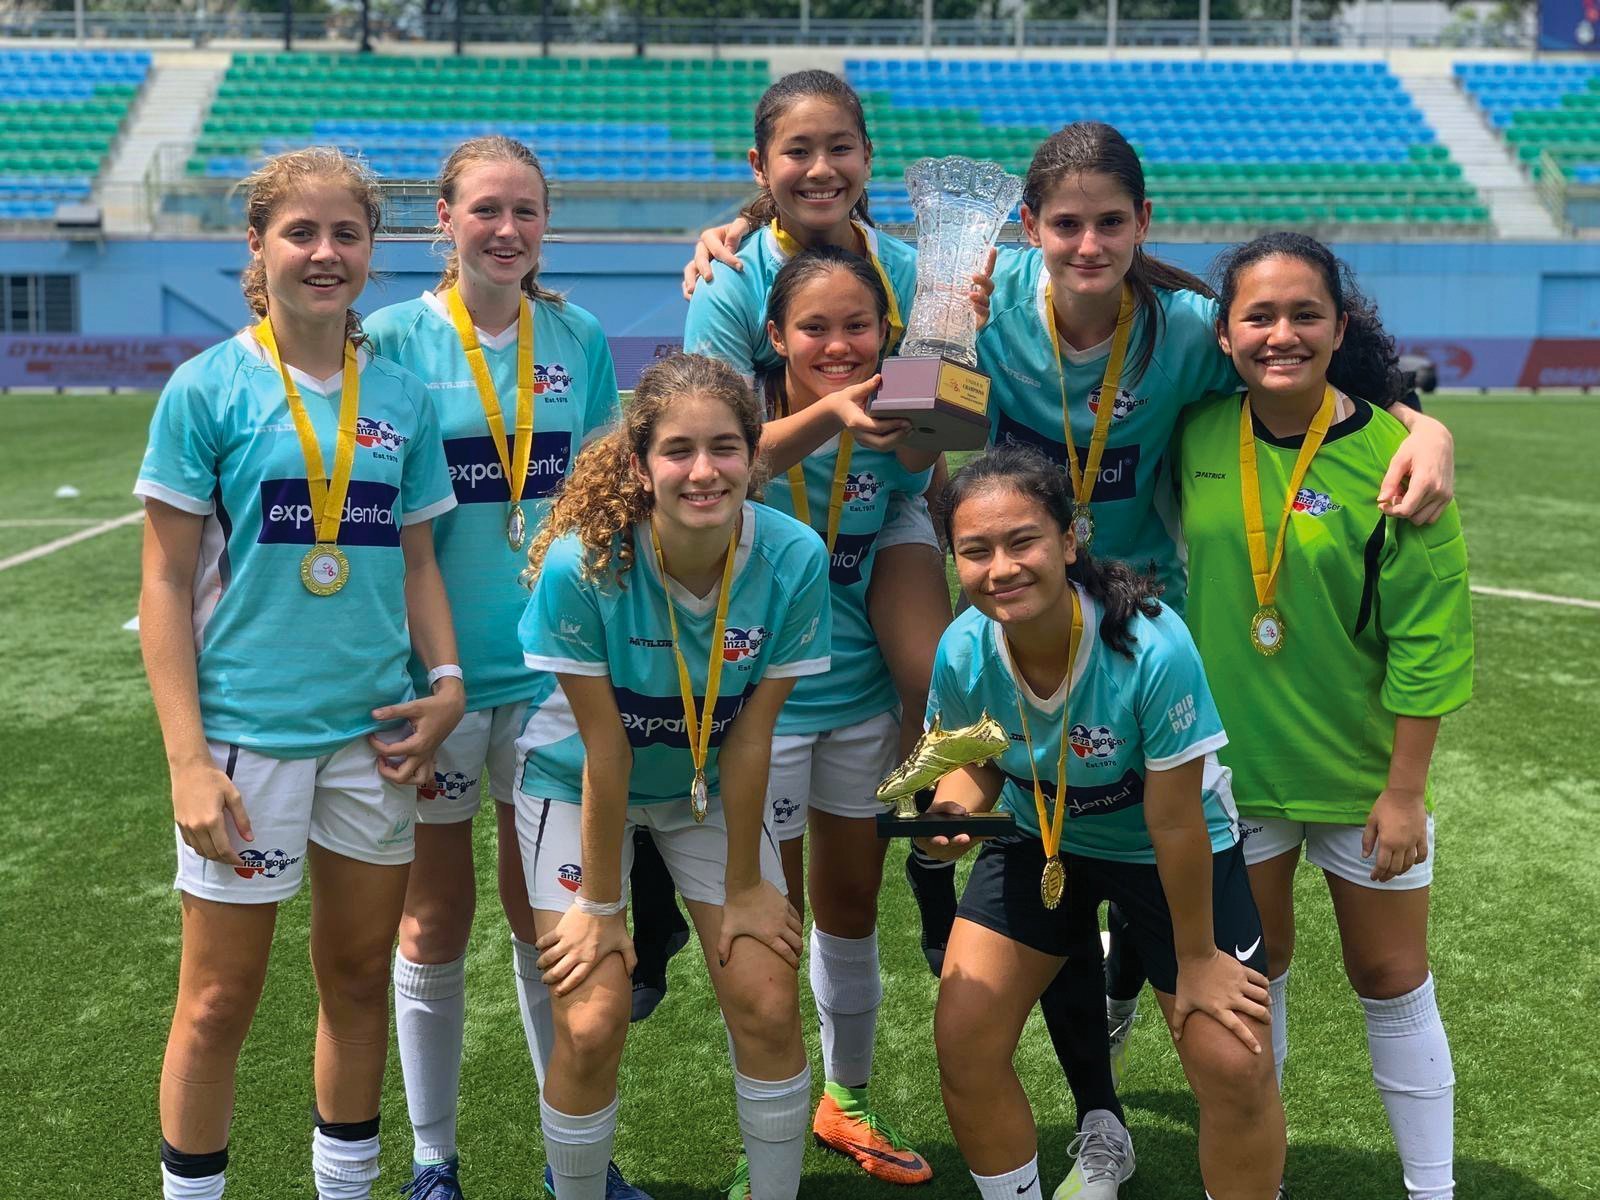 Anza-Soccer-Putri-Nur-Syaliza-Sazali-holding-Singa-Cup-2019